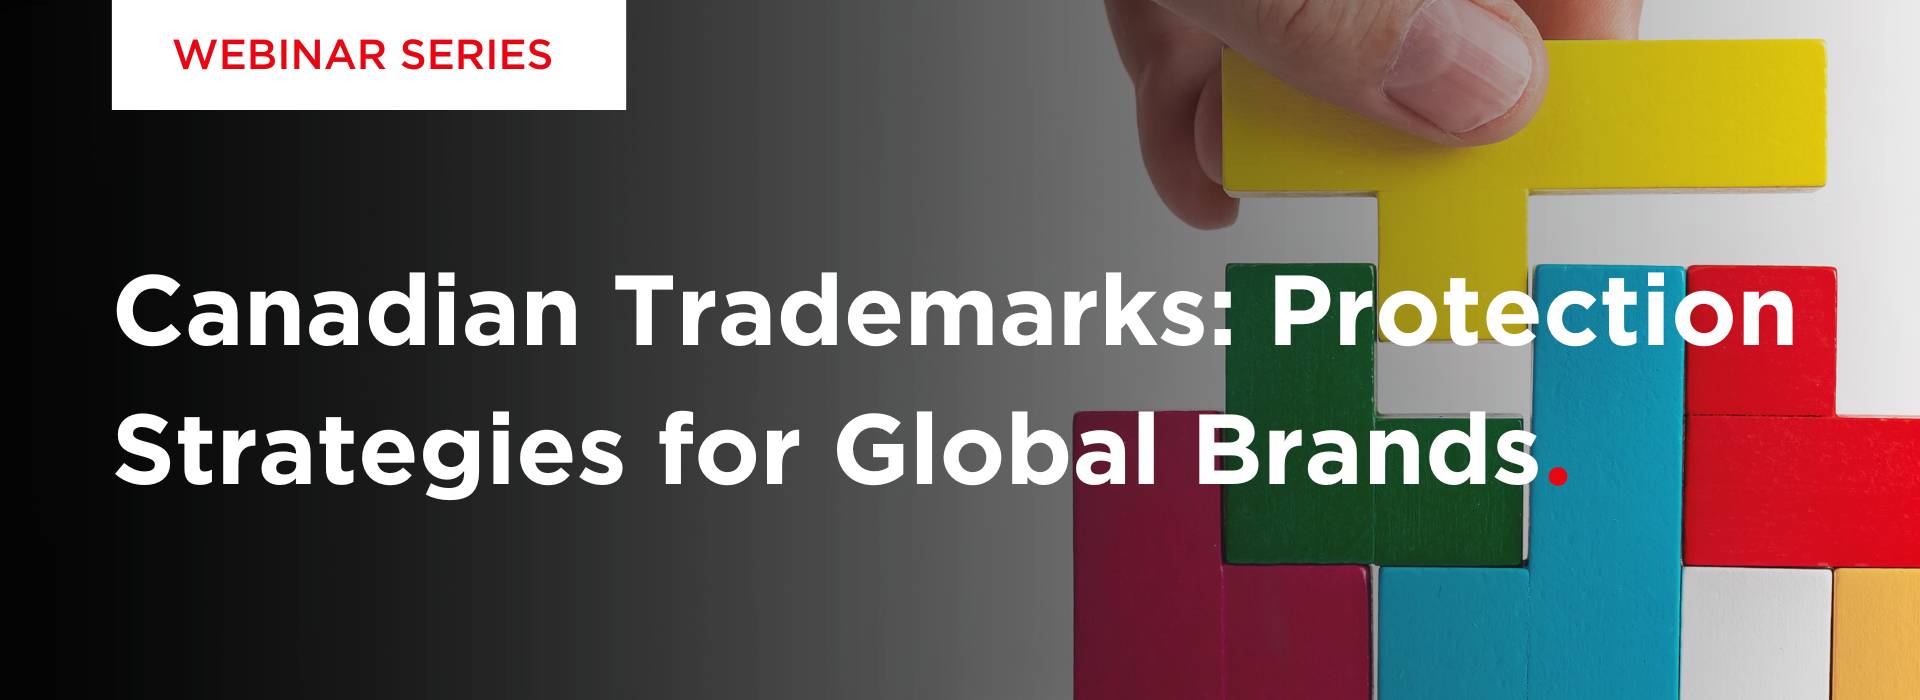 Canadian Trademarks Webinar Series